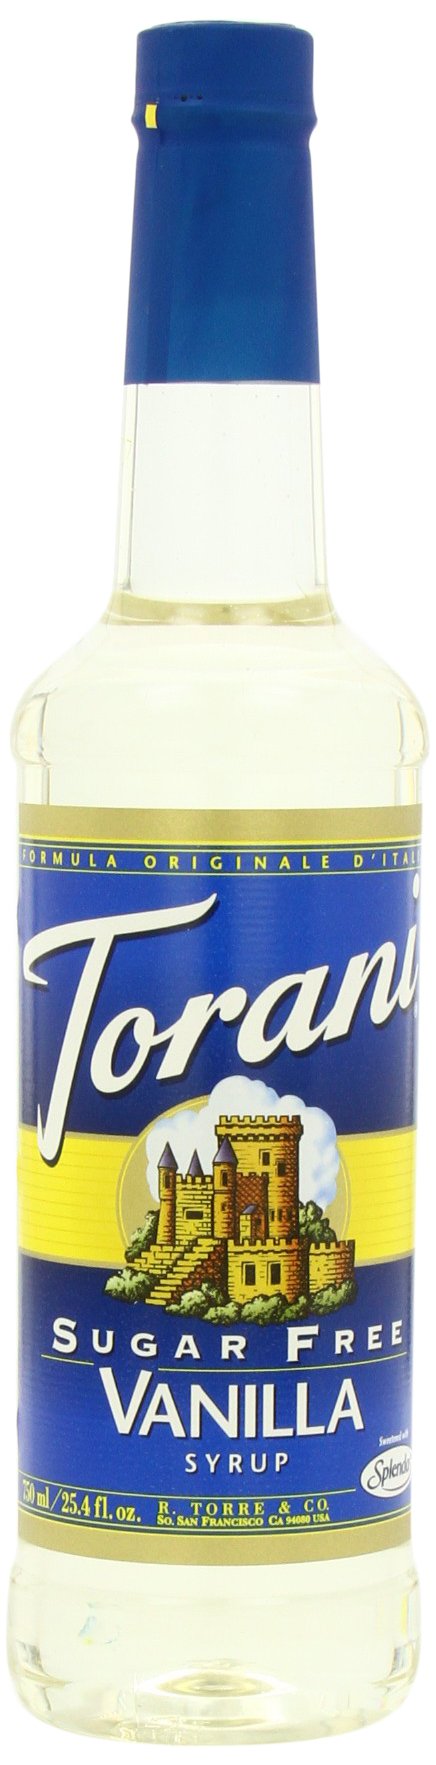 Torani Sugar Free Vanilla Syrup 12.7 Fl Oz Bottle